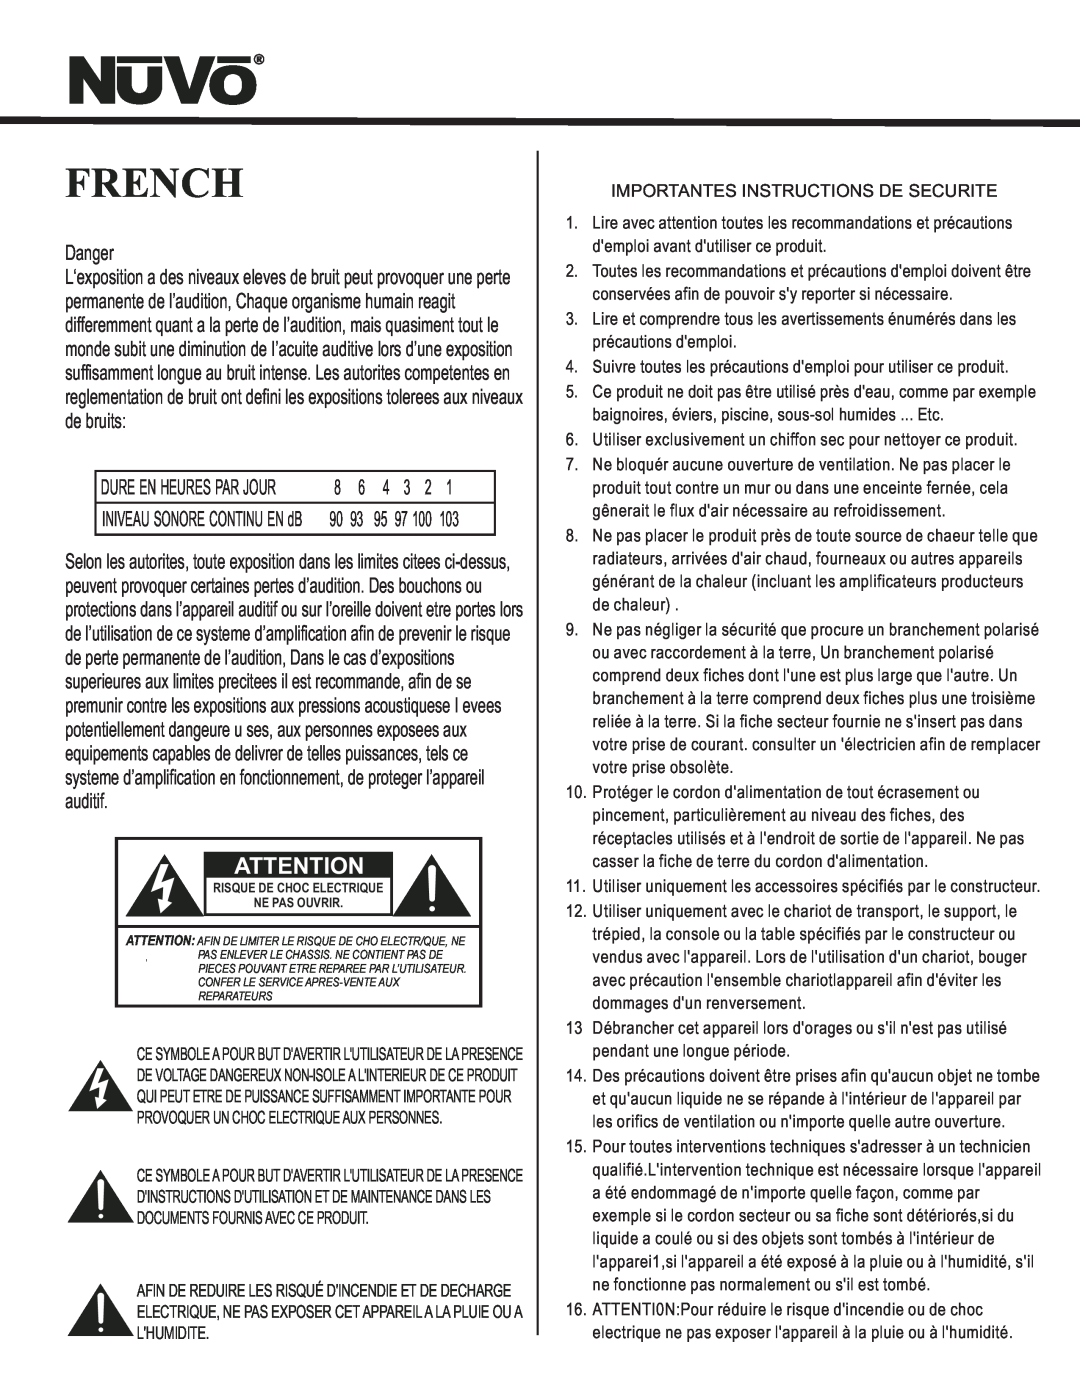 Nuvo NV-E6GMS, NV-E6GXS manual French, Danger 